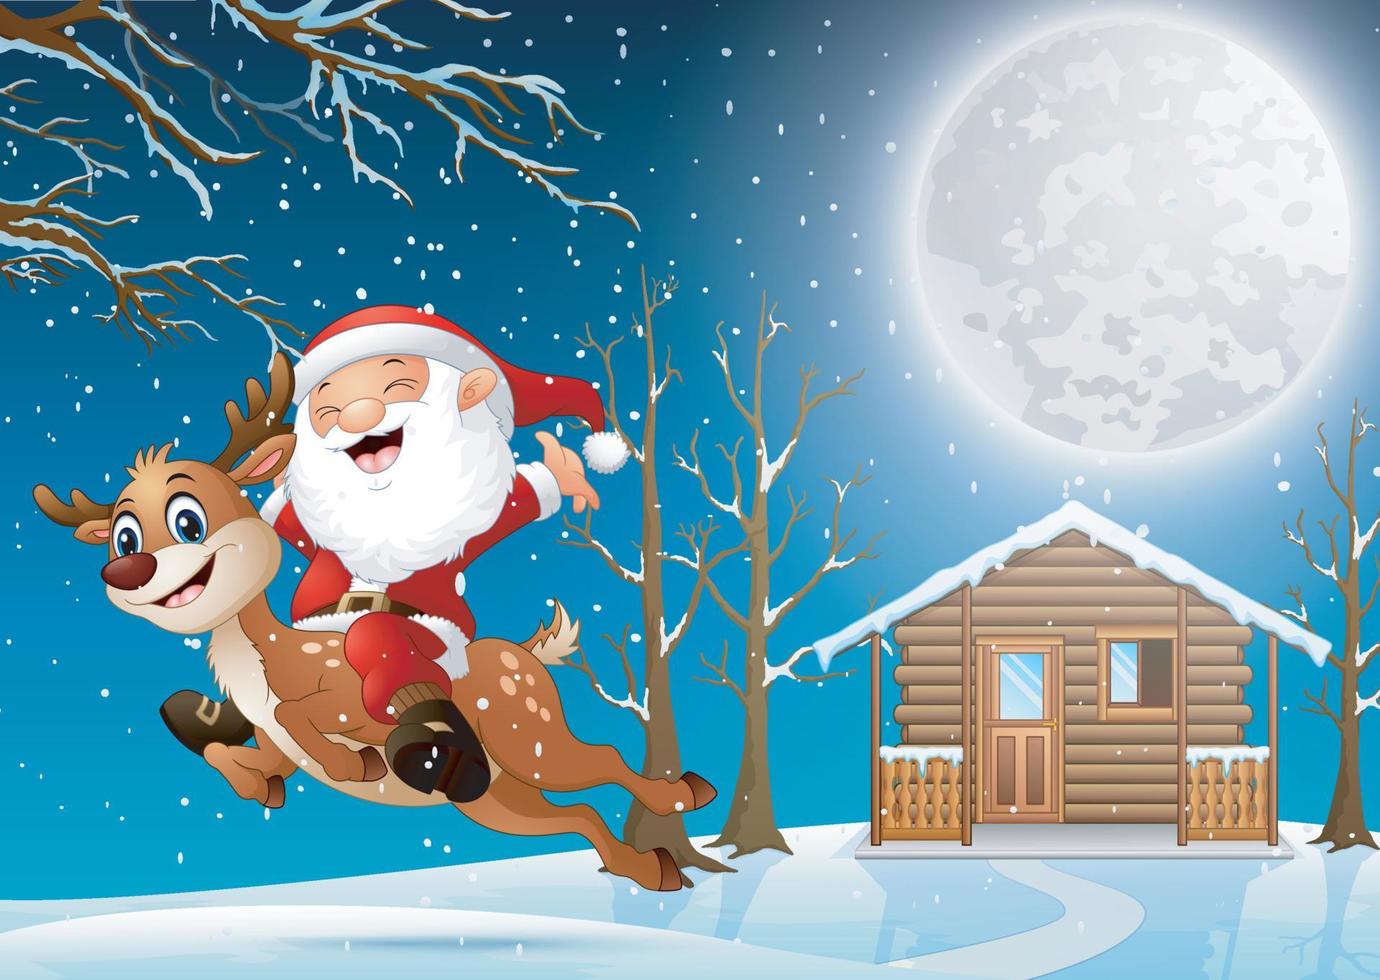 Santa claus riding a reindeer through the night village vector